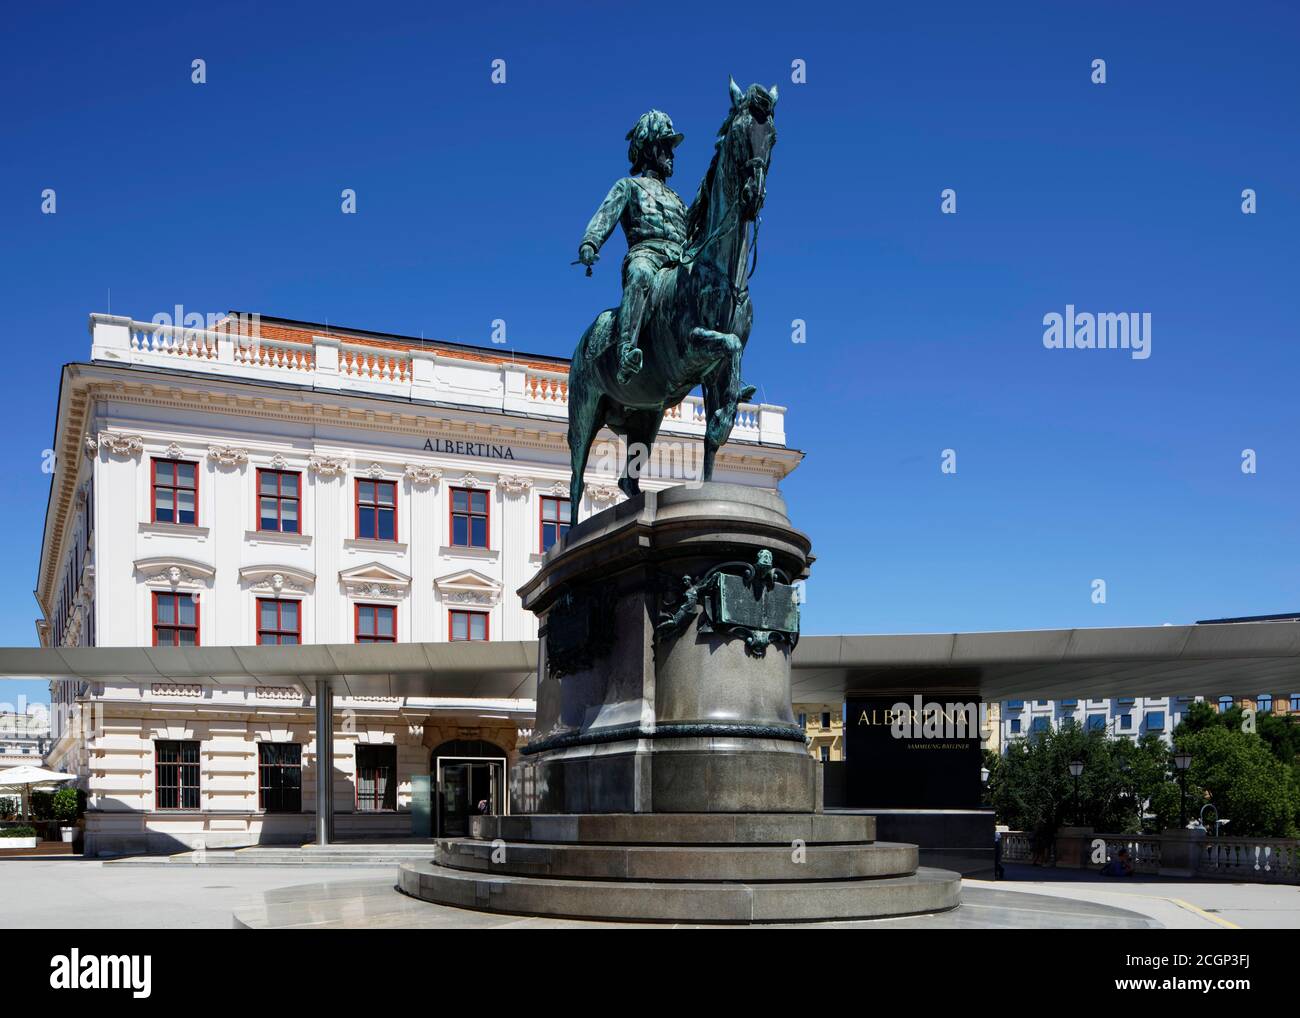 Erzherzog-Albrecht-Denkmal, 1817, 1895, equestrian statue, statue, bronze, behind it Soravia-Wing by Hans Hollein, behind it Albertina Kustmuseum Stock Photo